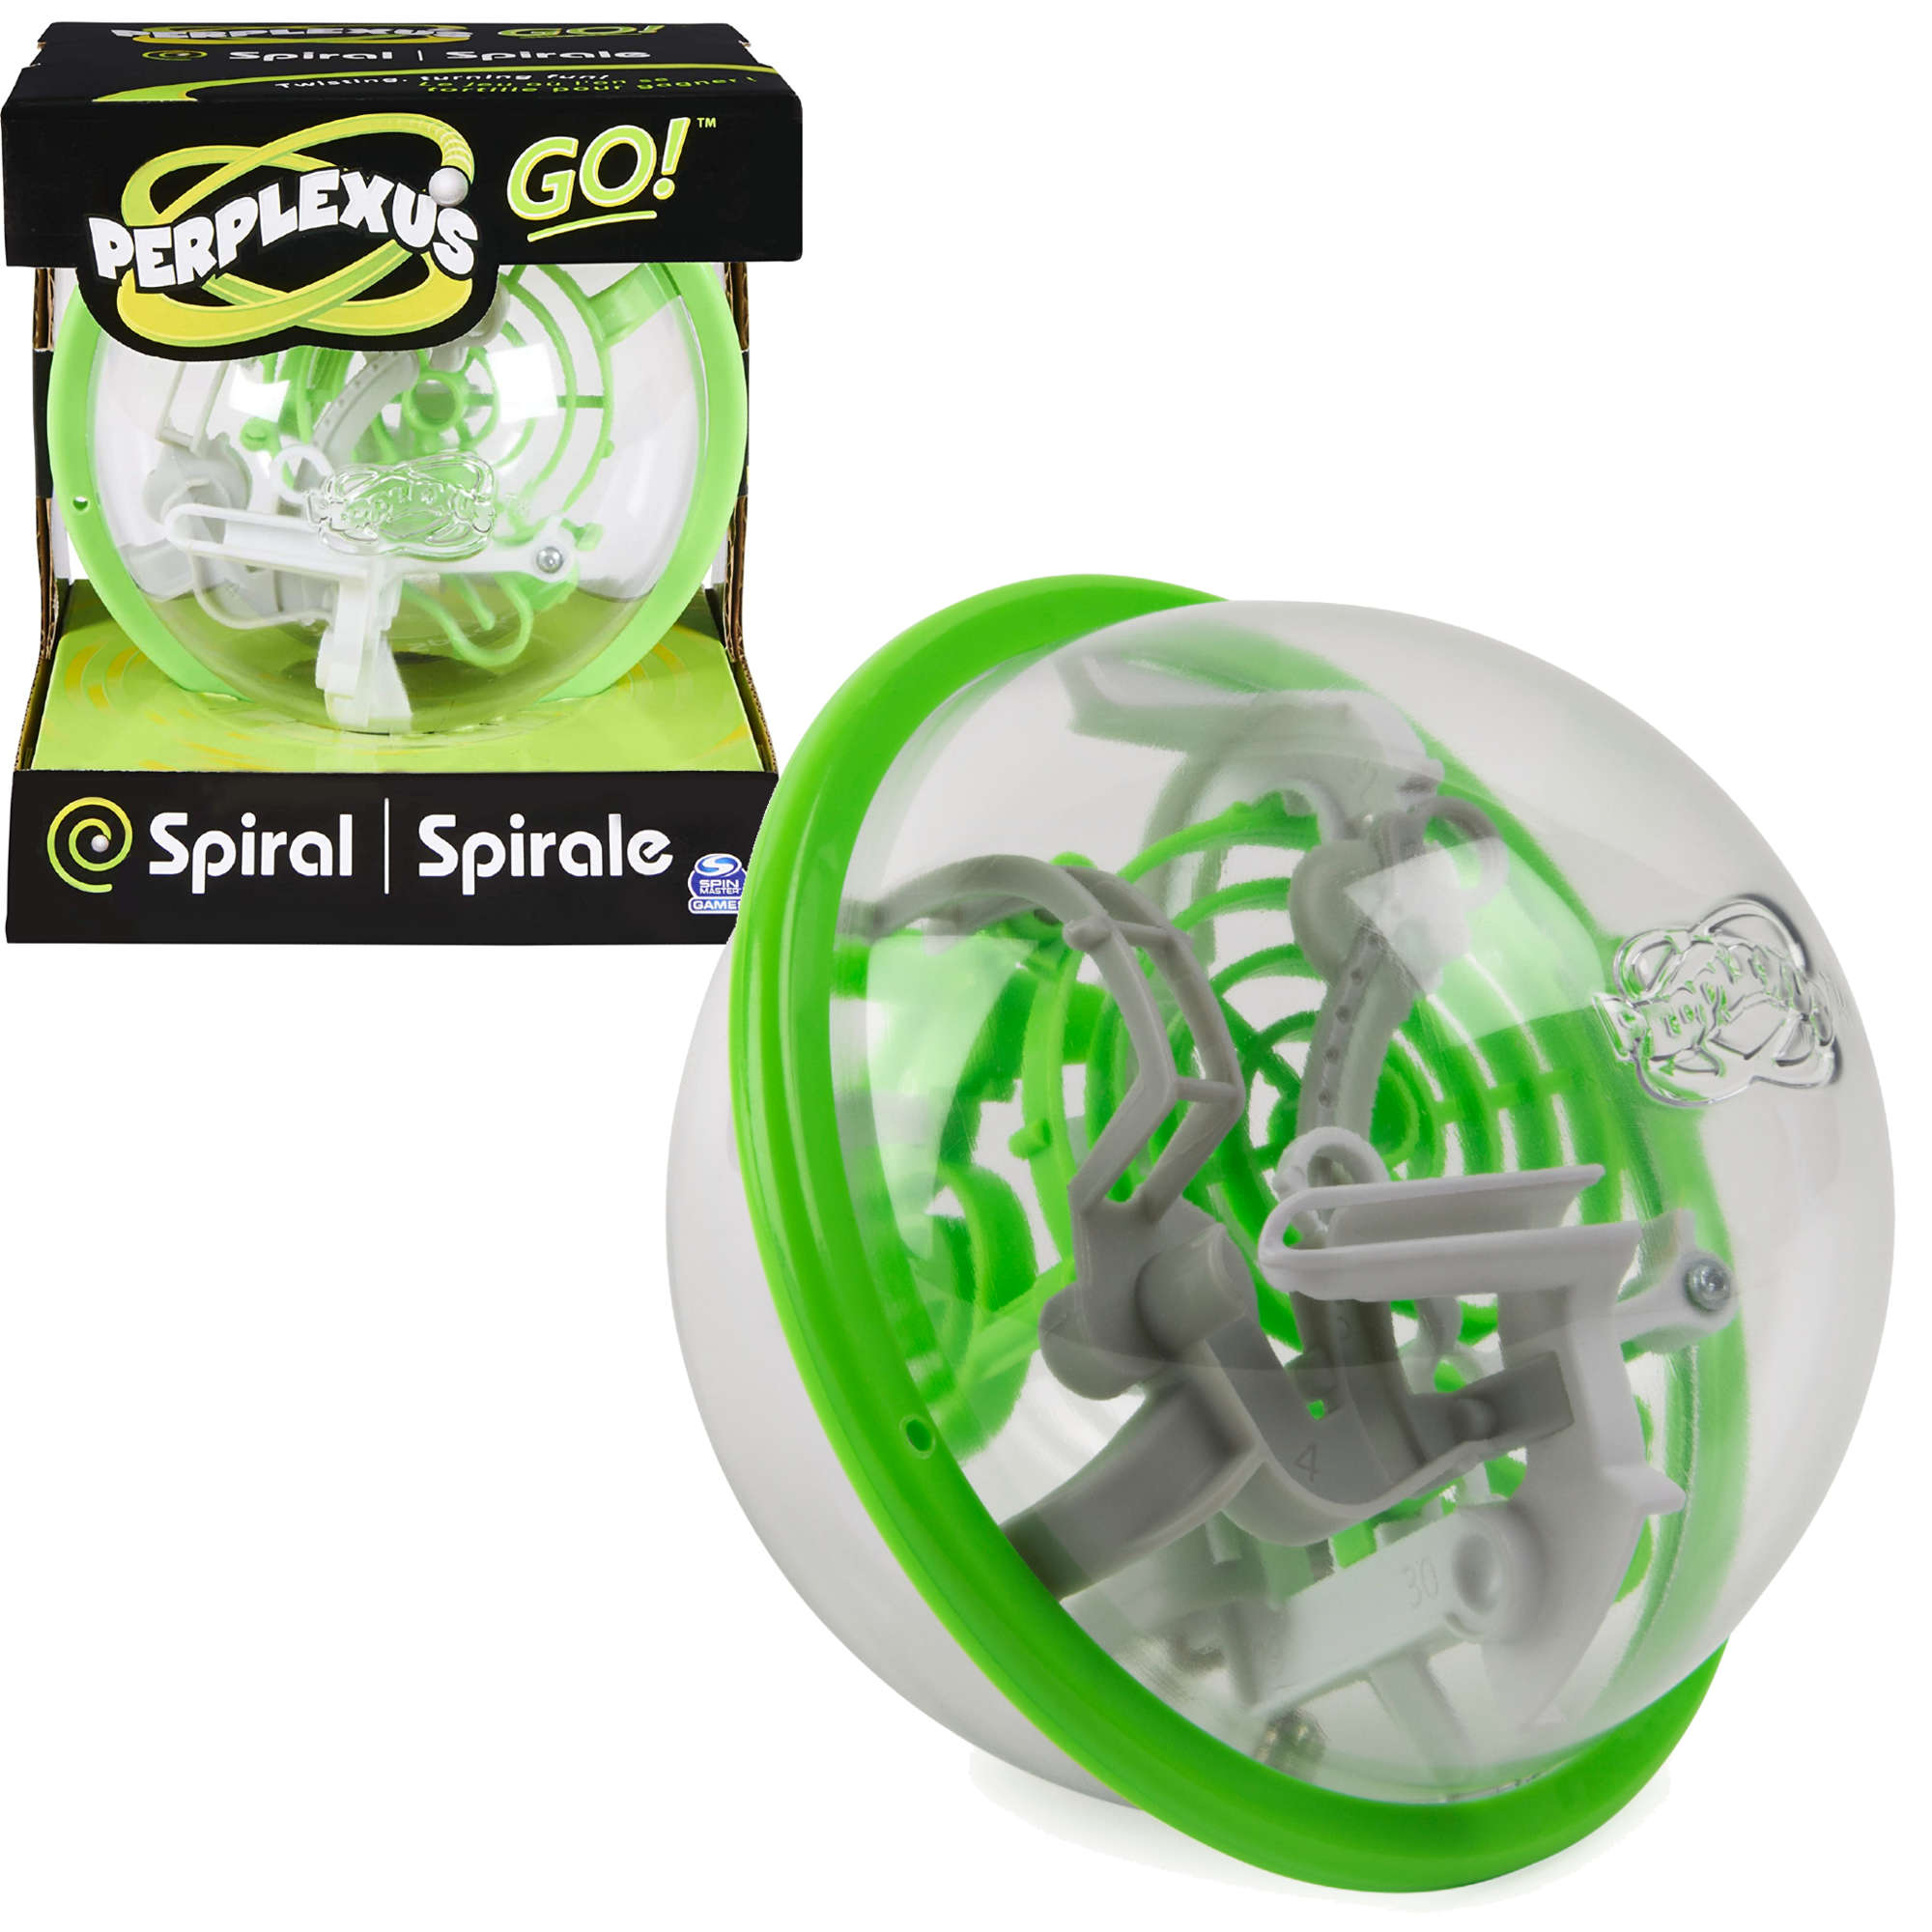 Perplexus Go! spirala gra zrcznociowa zielona kula labirynt Spin Master